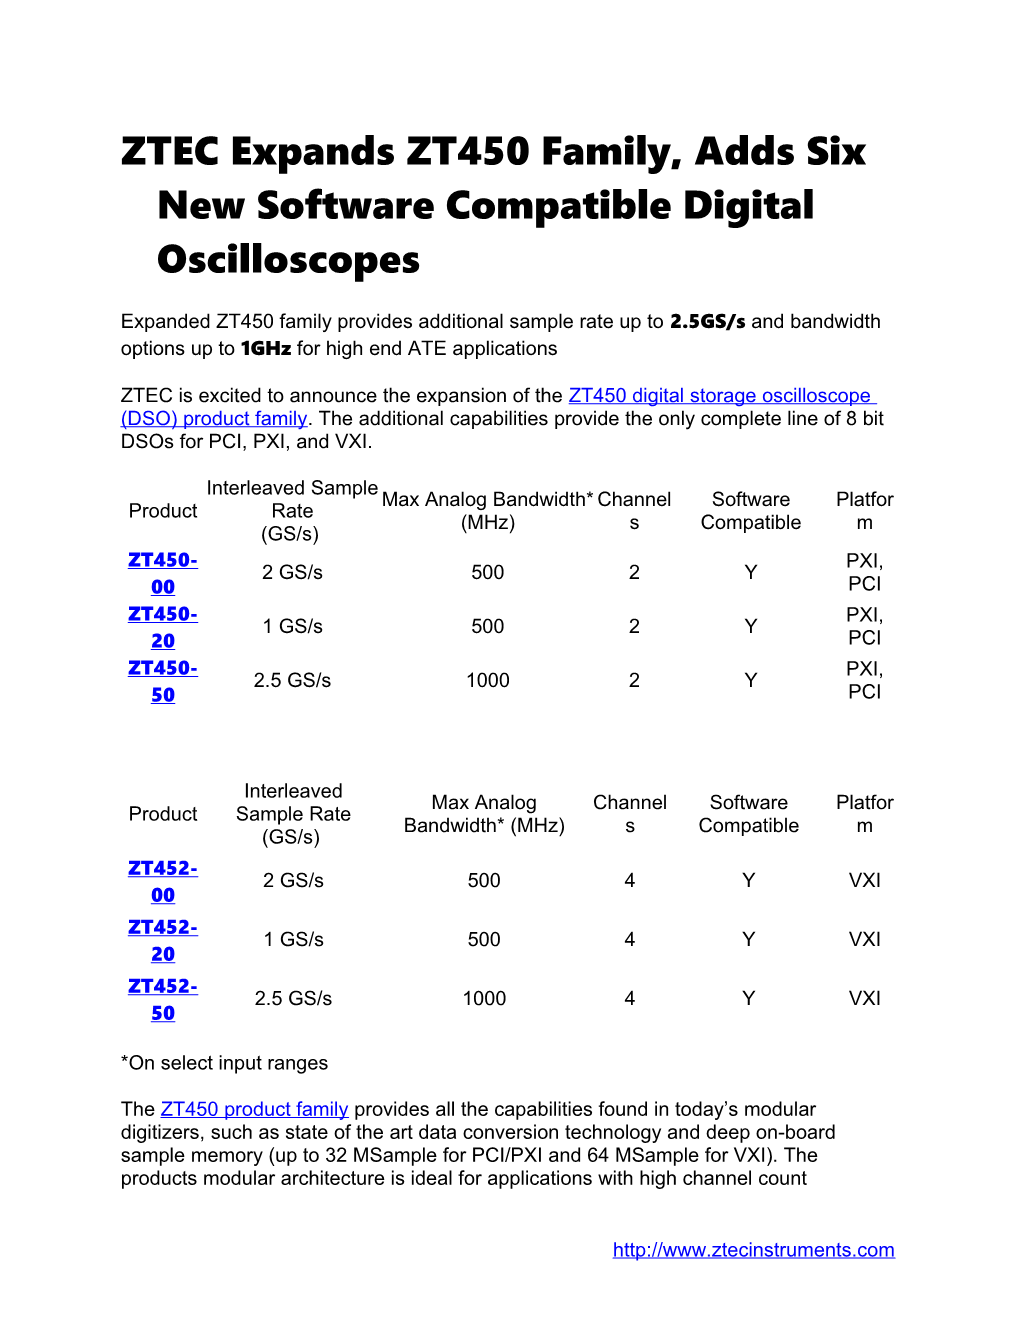 ZTEC Expands ZT450 Family, Adds Six New Software Compatible Digital Oscilloscopes